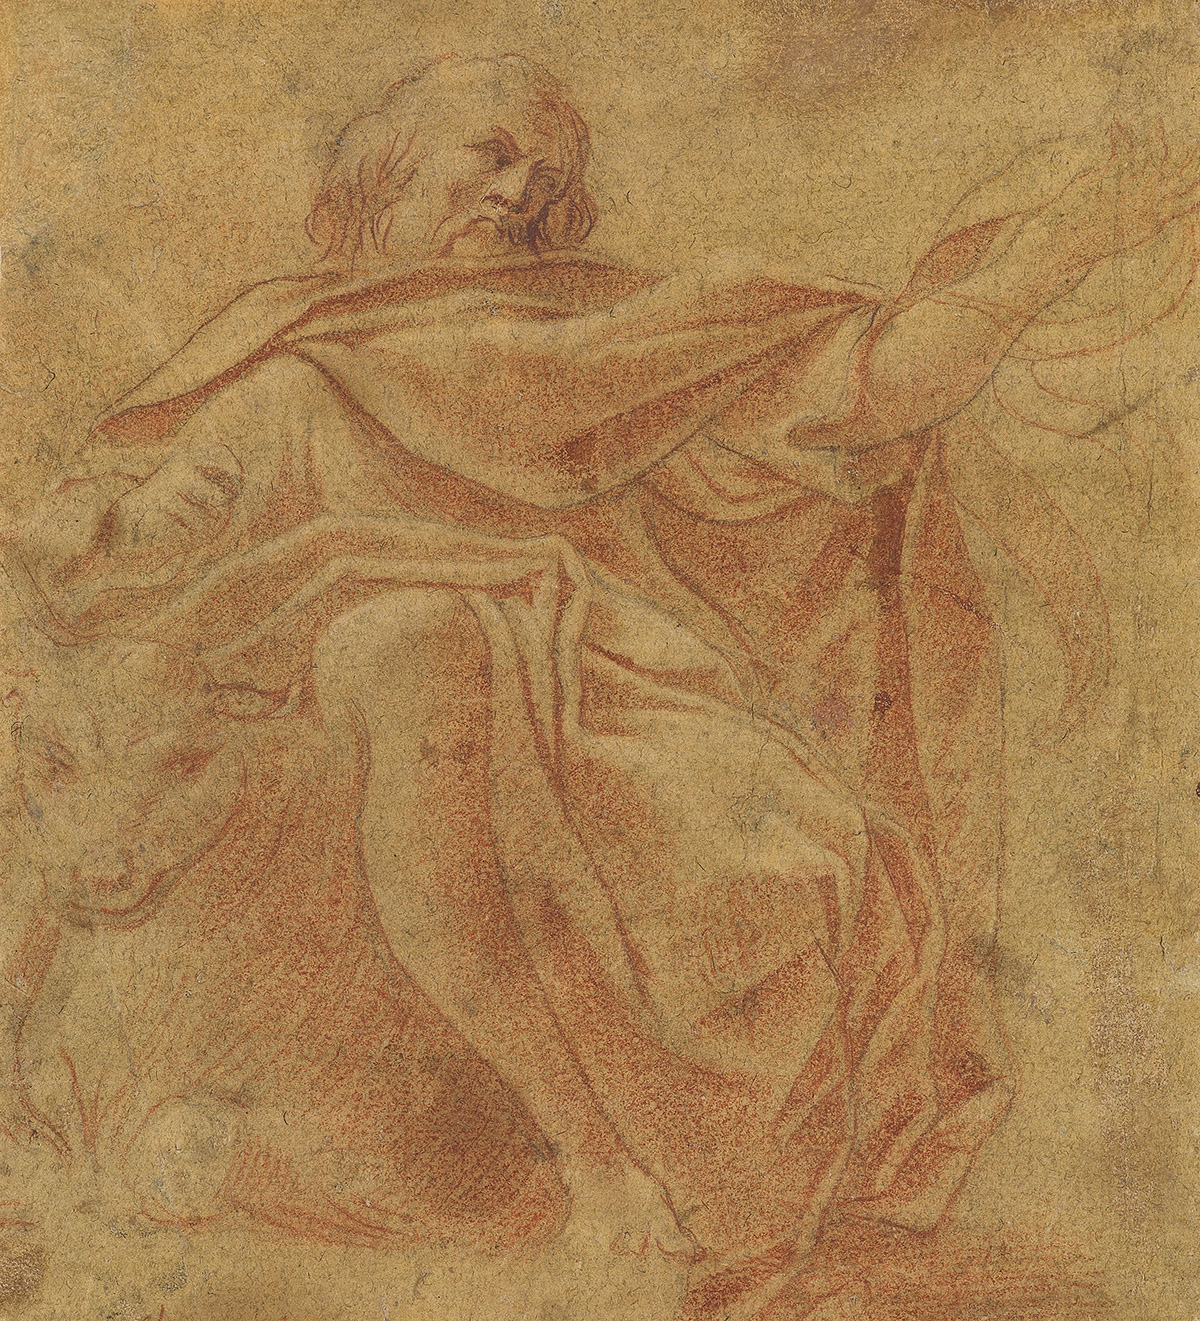 LUDOVICO CARRACCI (Bologna 1555-1619 Bologna) St. Luke.